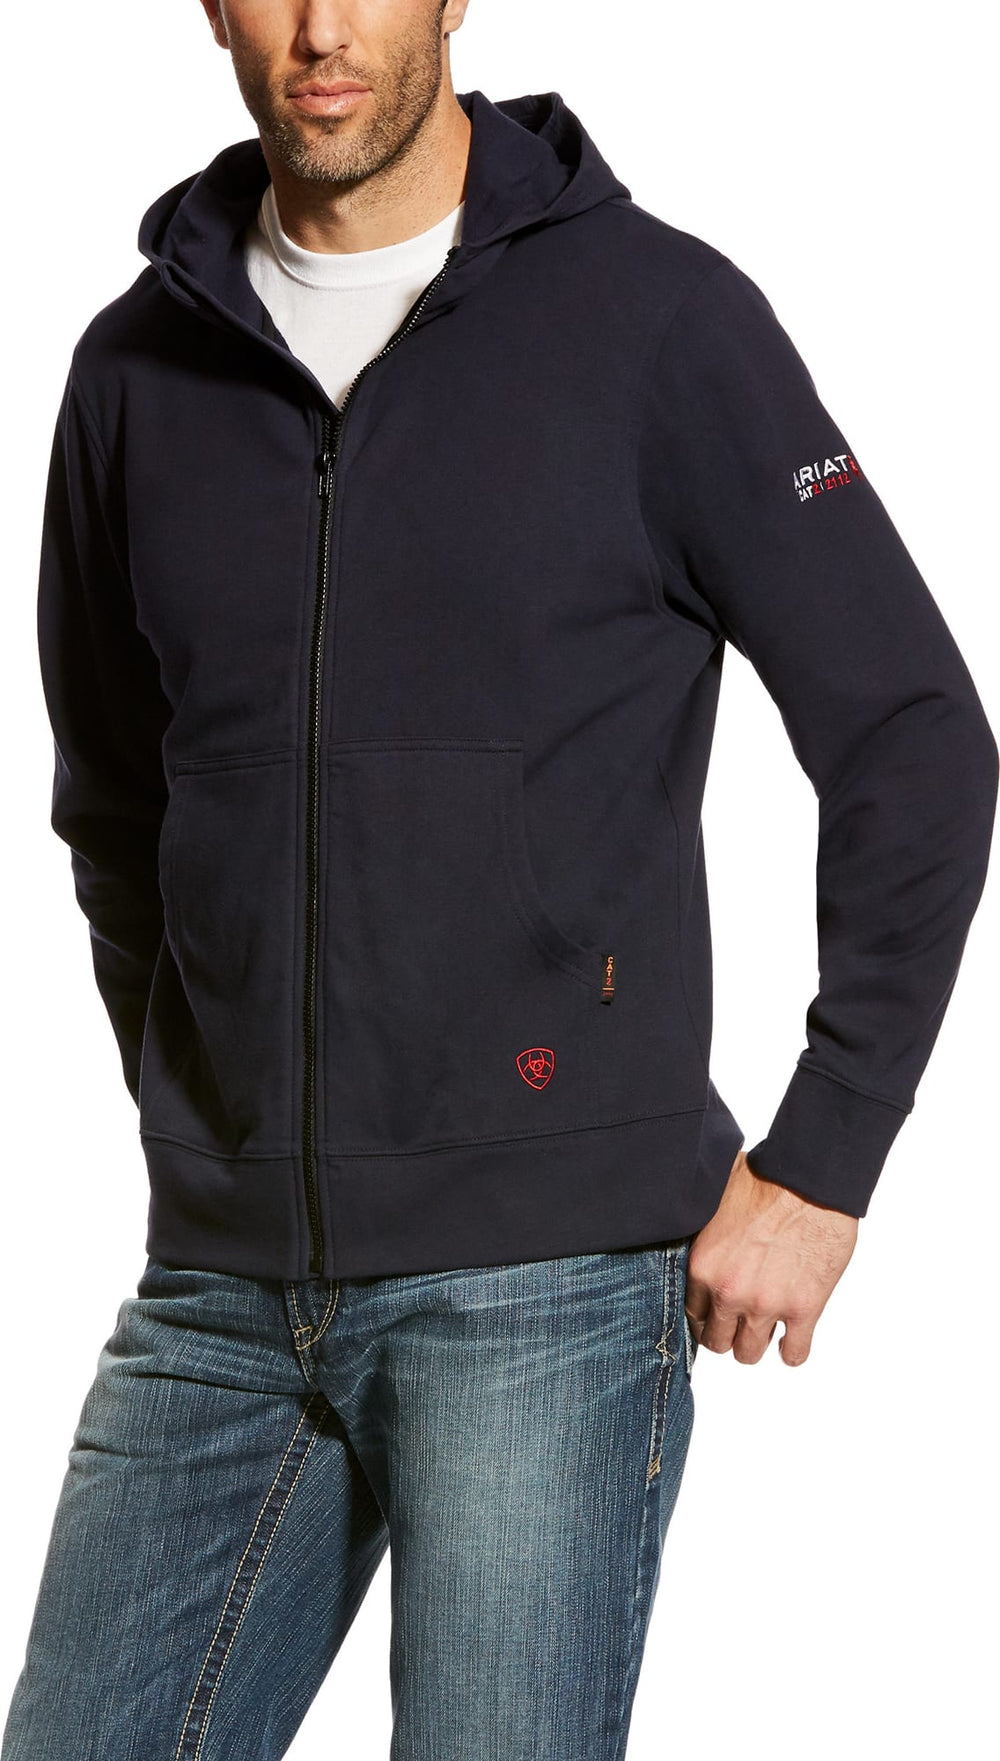 Ariat FR 10023979 Navy Durastretch Zip Up Hooded Sweatshirt